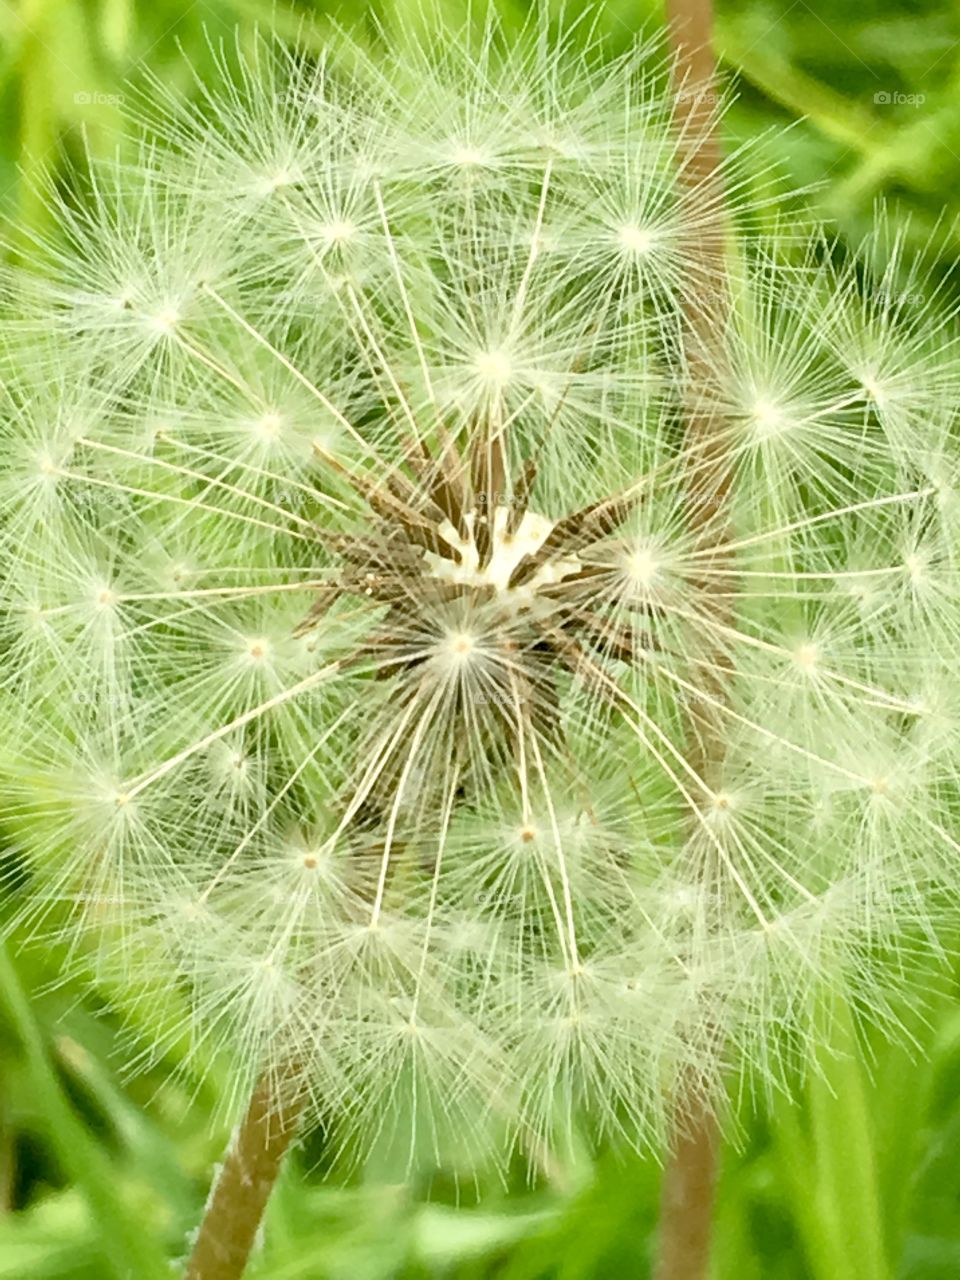 Organic textural pattern in a seeding dandelion head closeup outdoors 